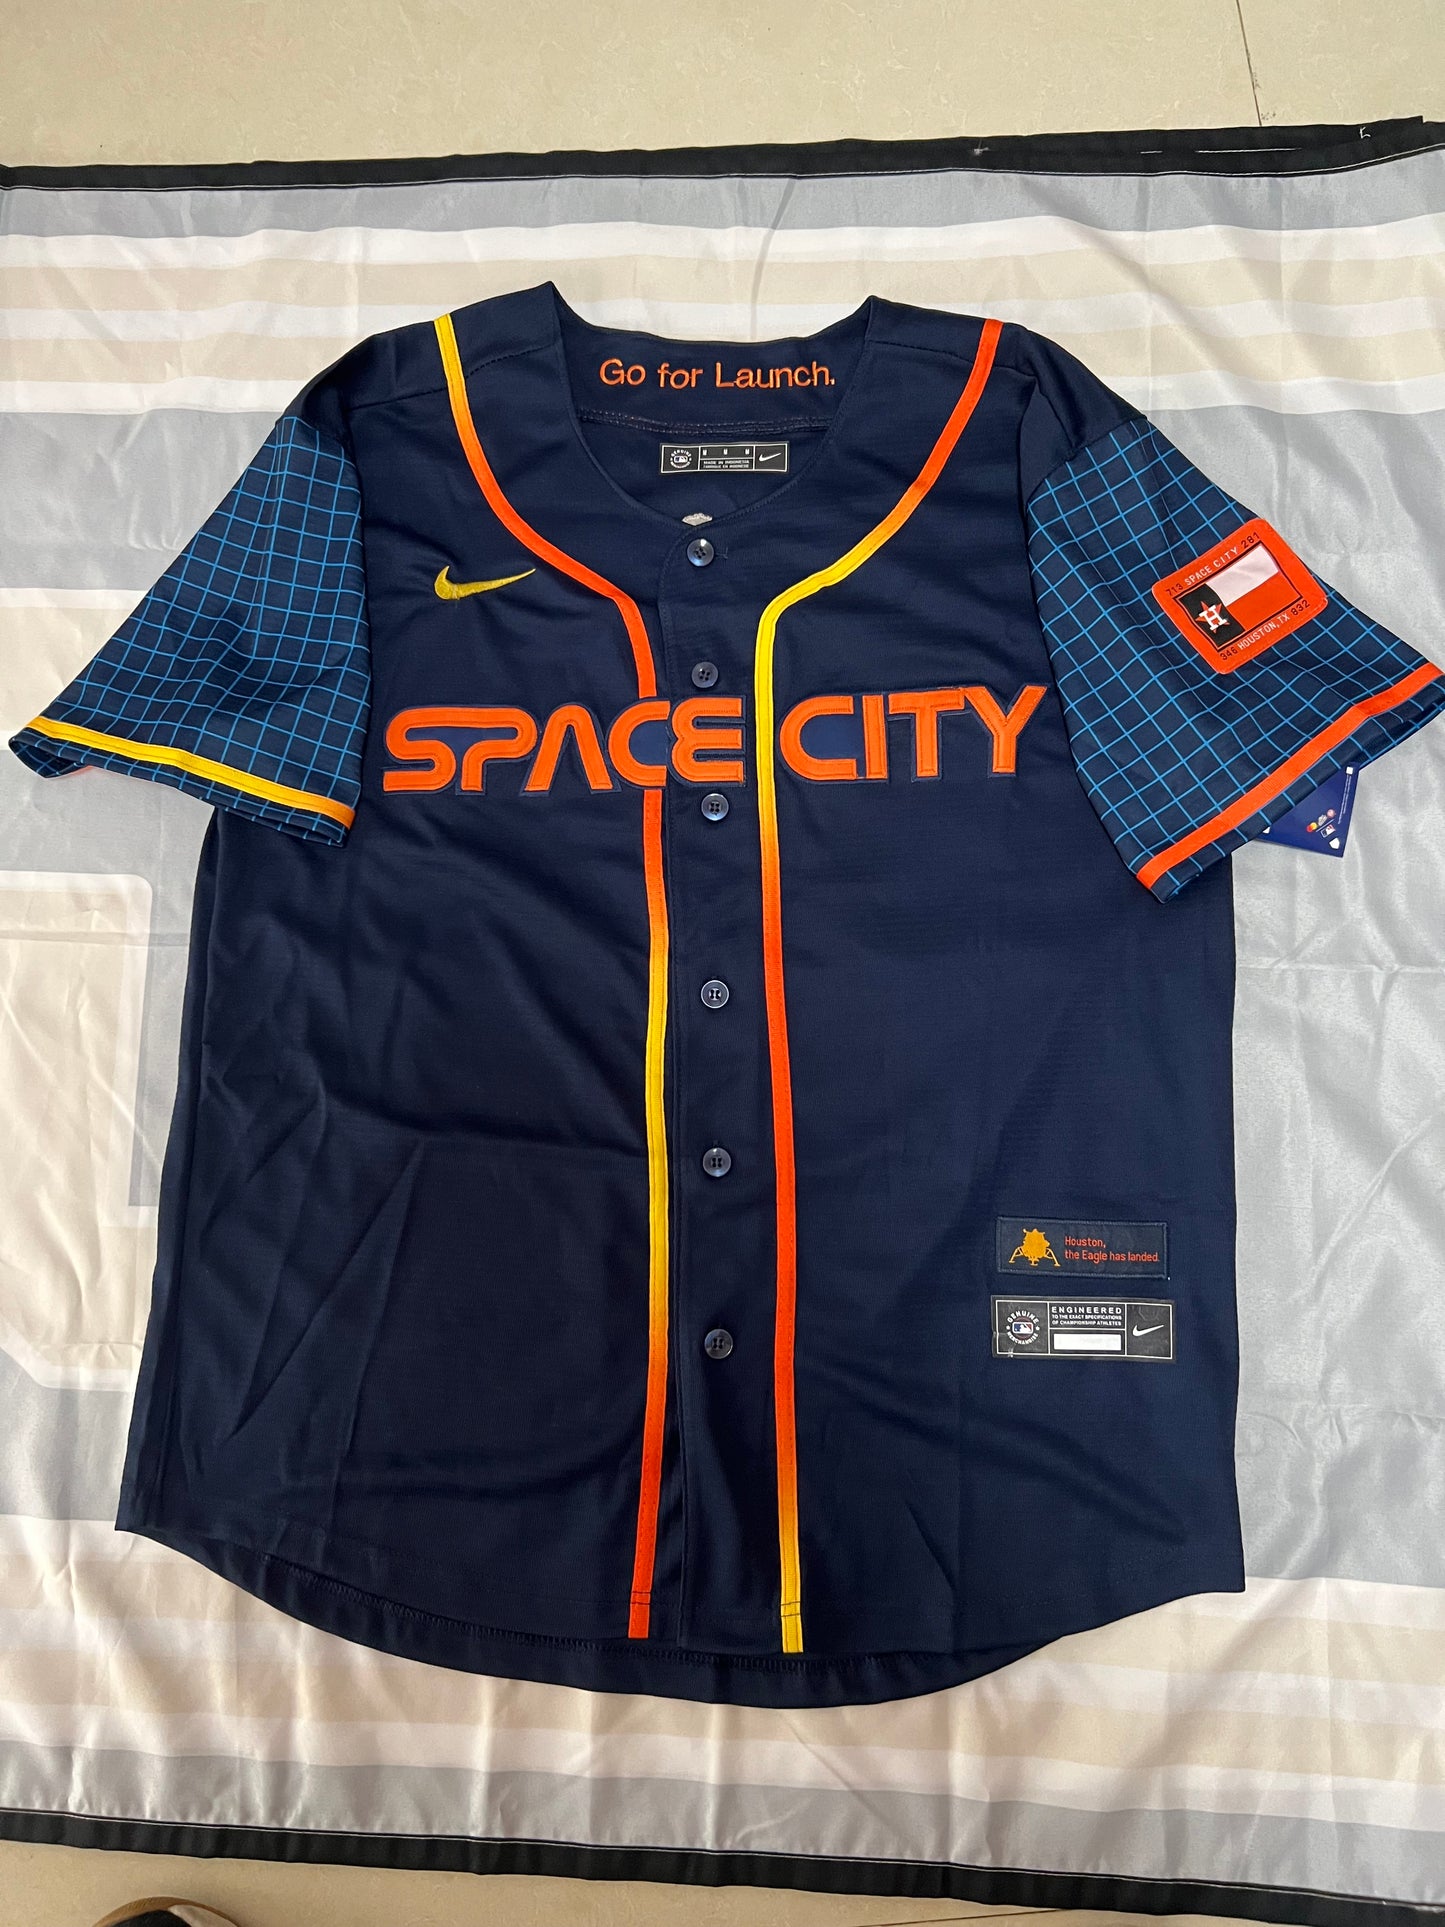 yordan space city jersey